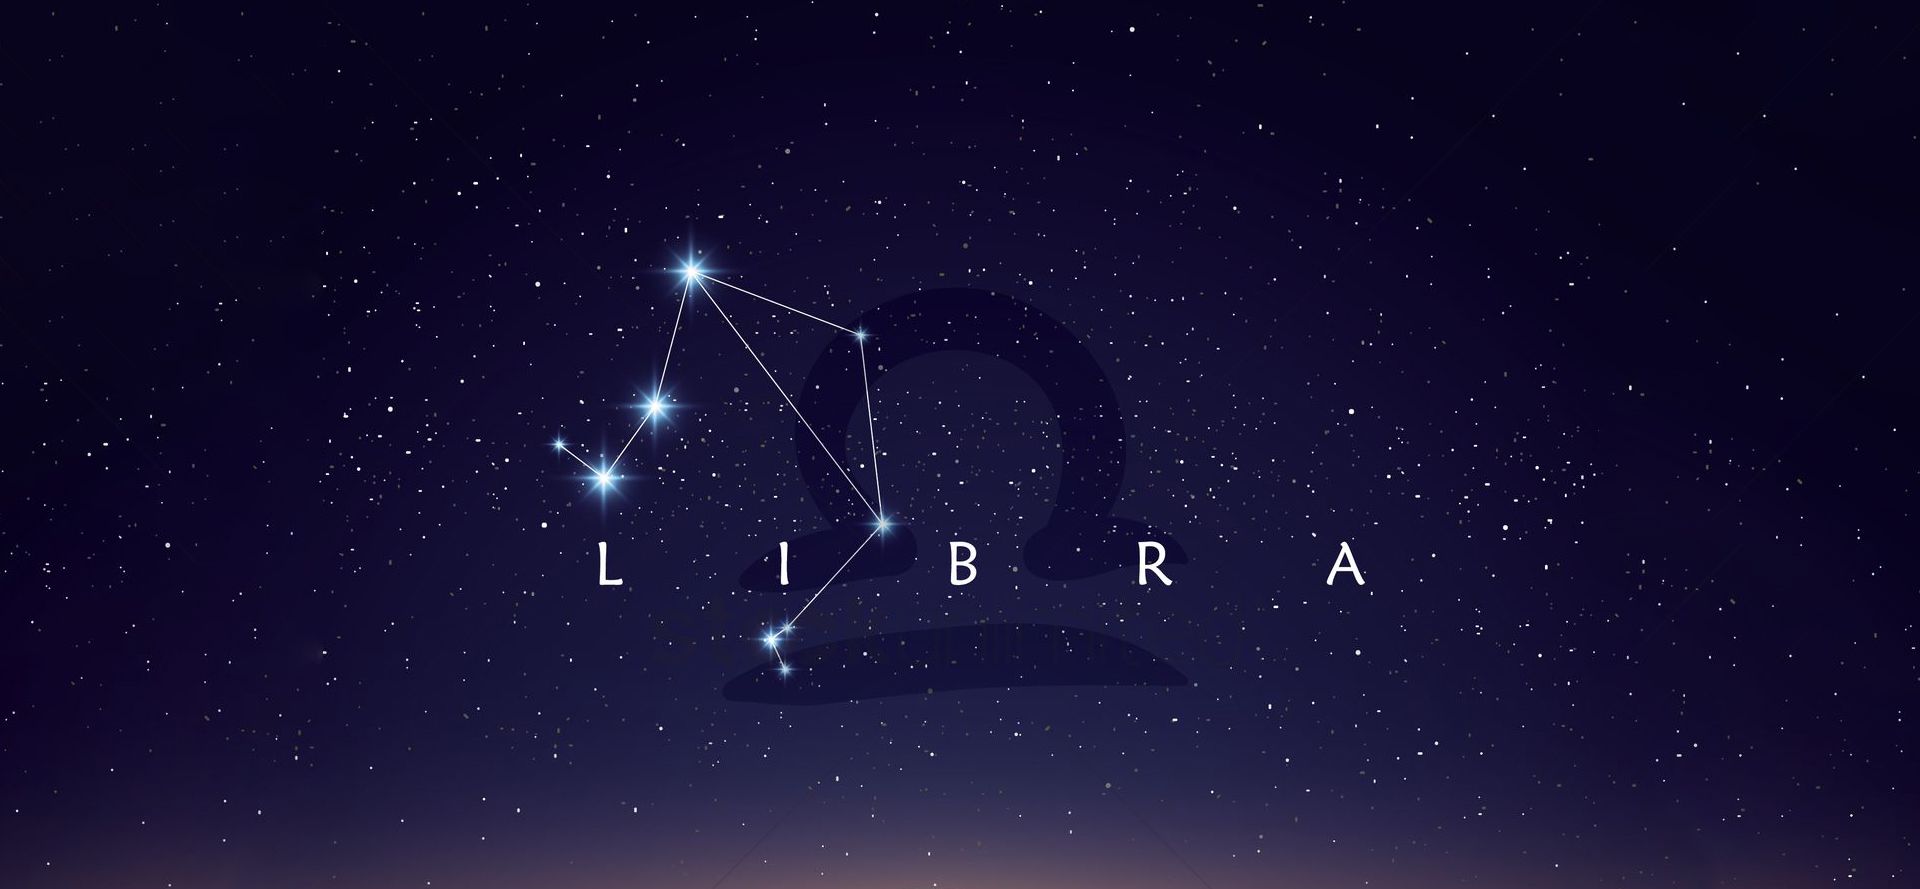 Libra constellation.